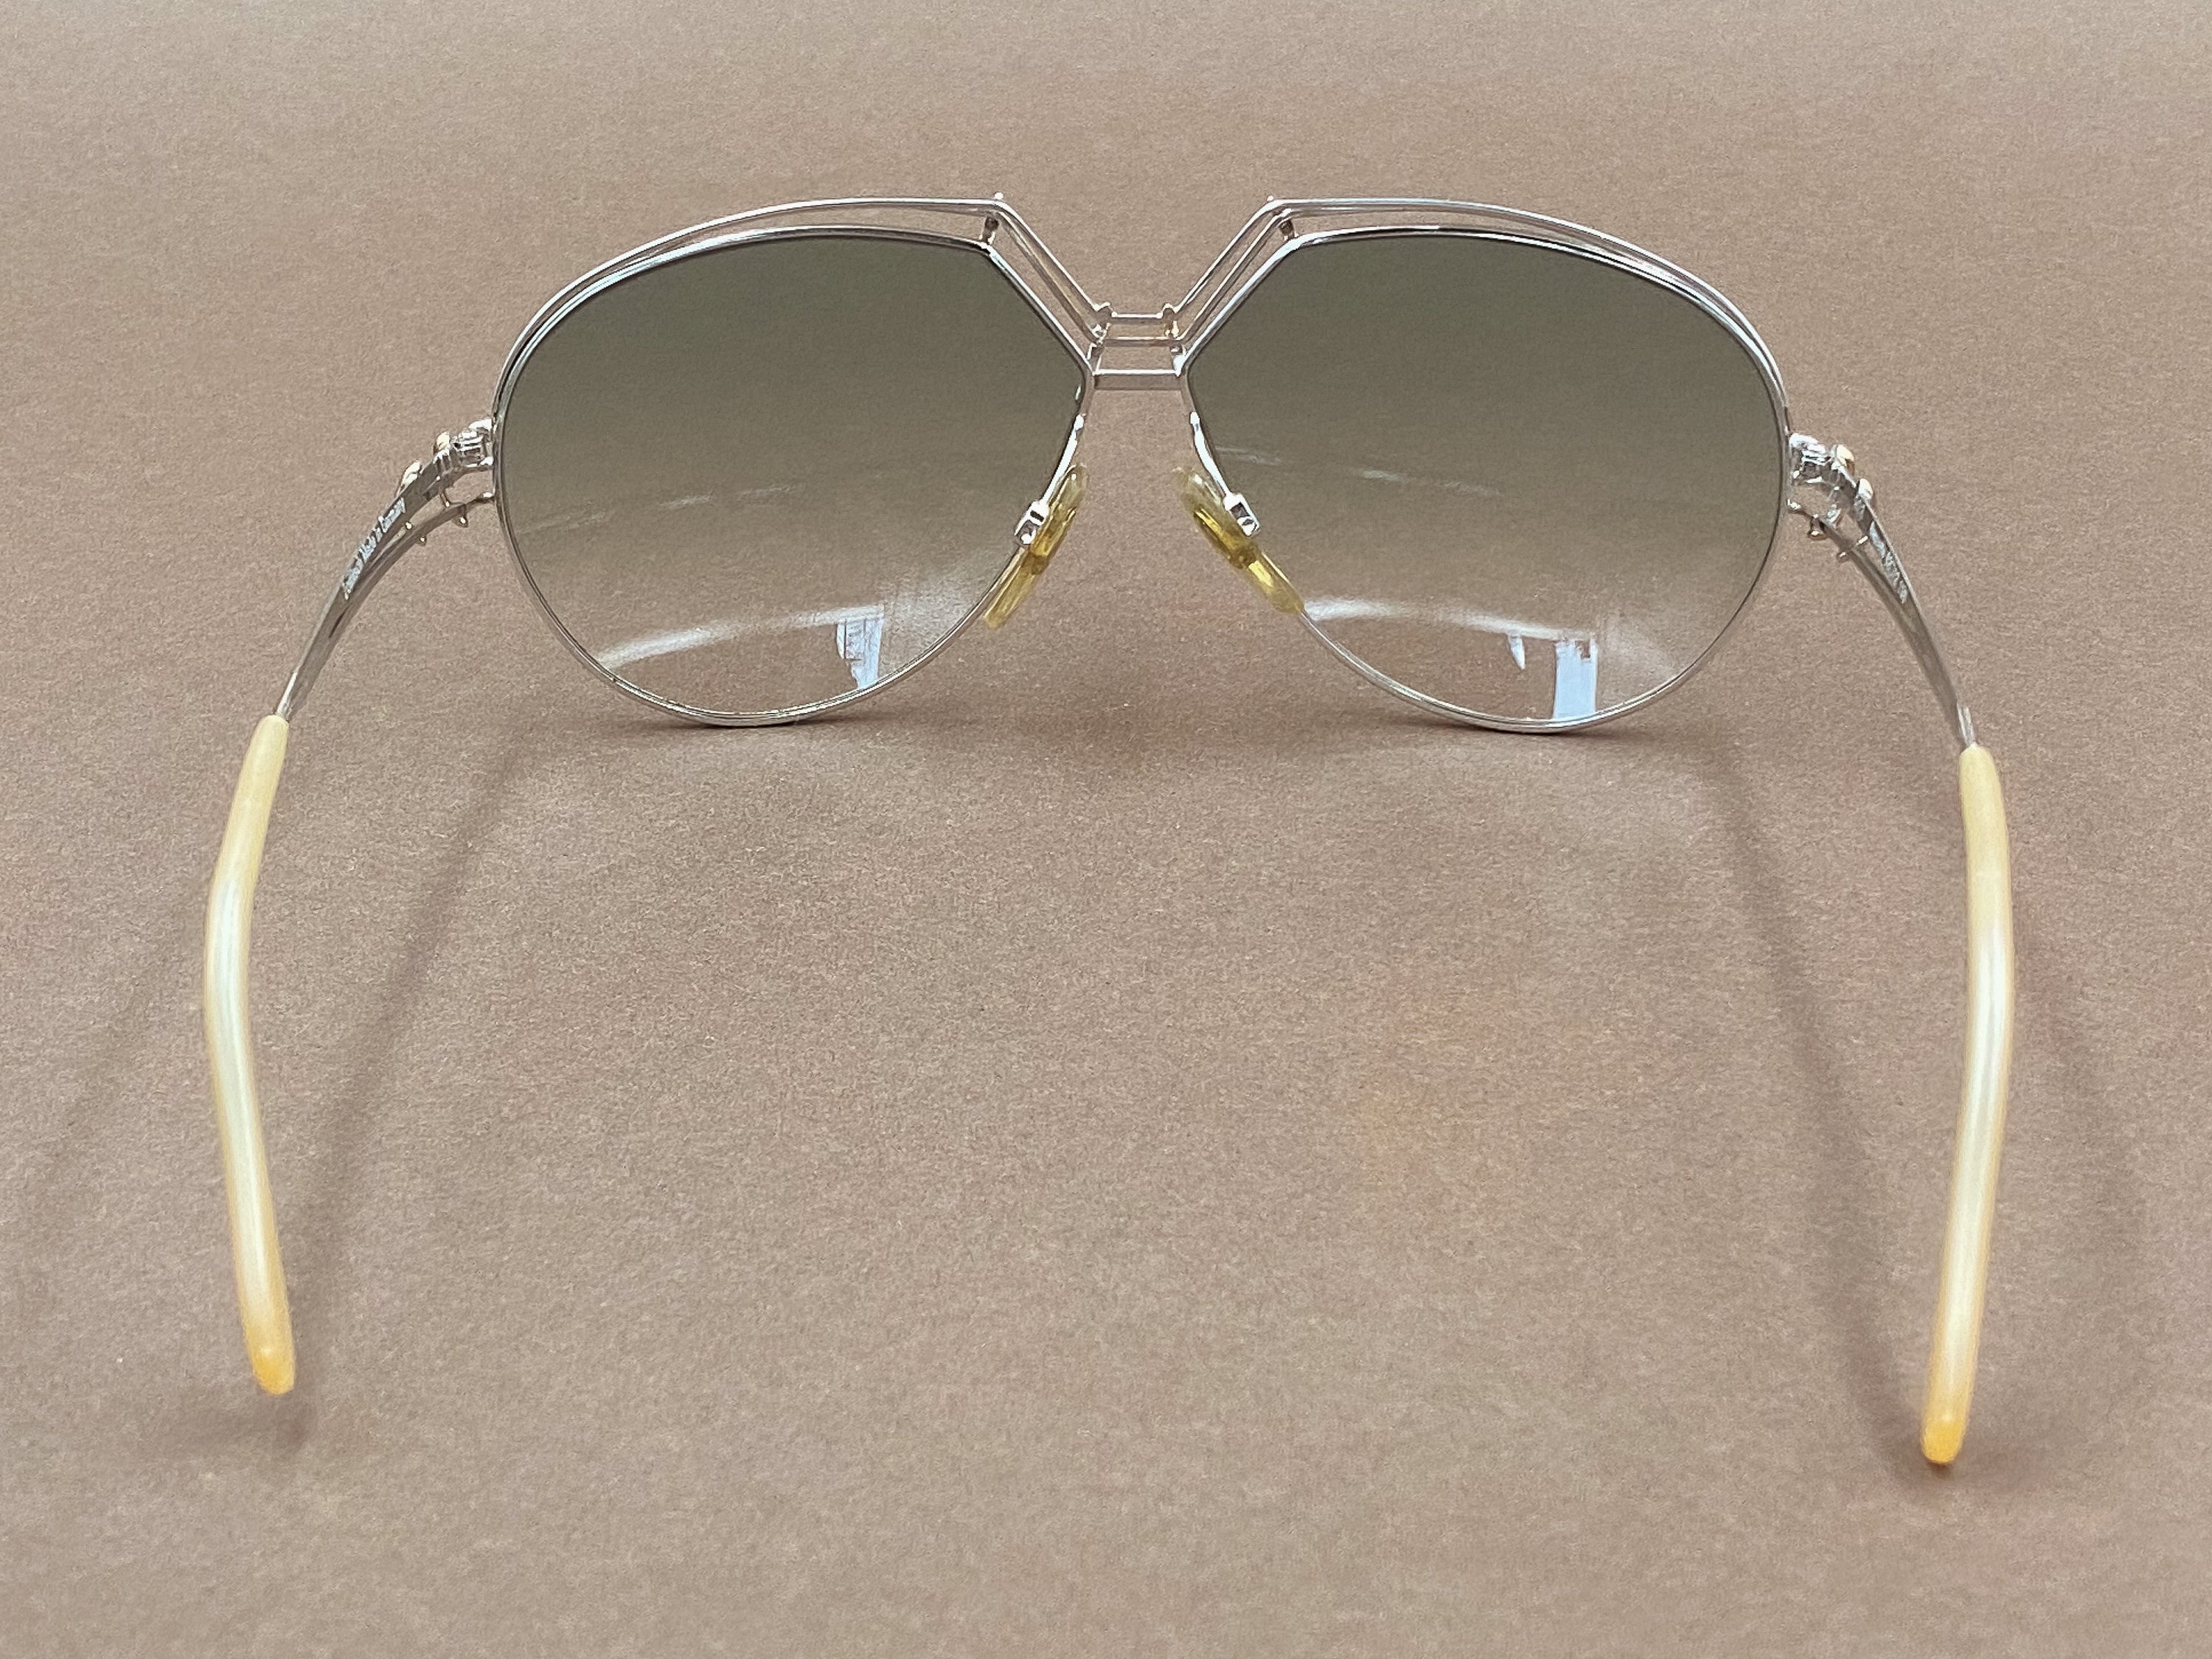 Zollitsch 903 Baguette ladies sunglasses